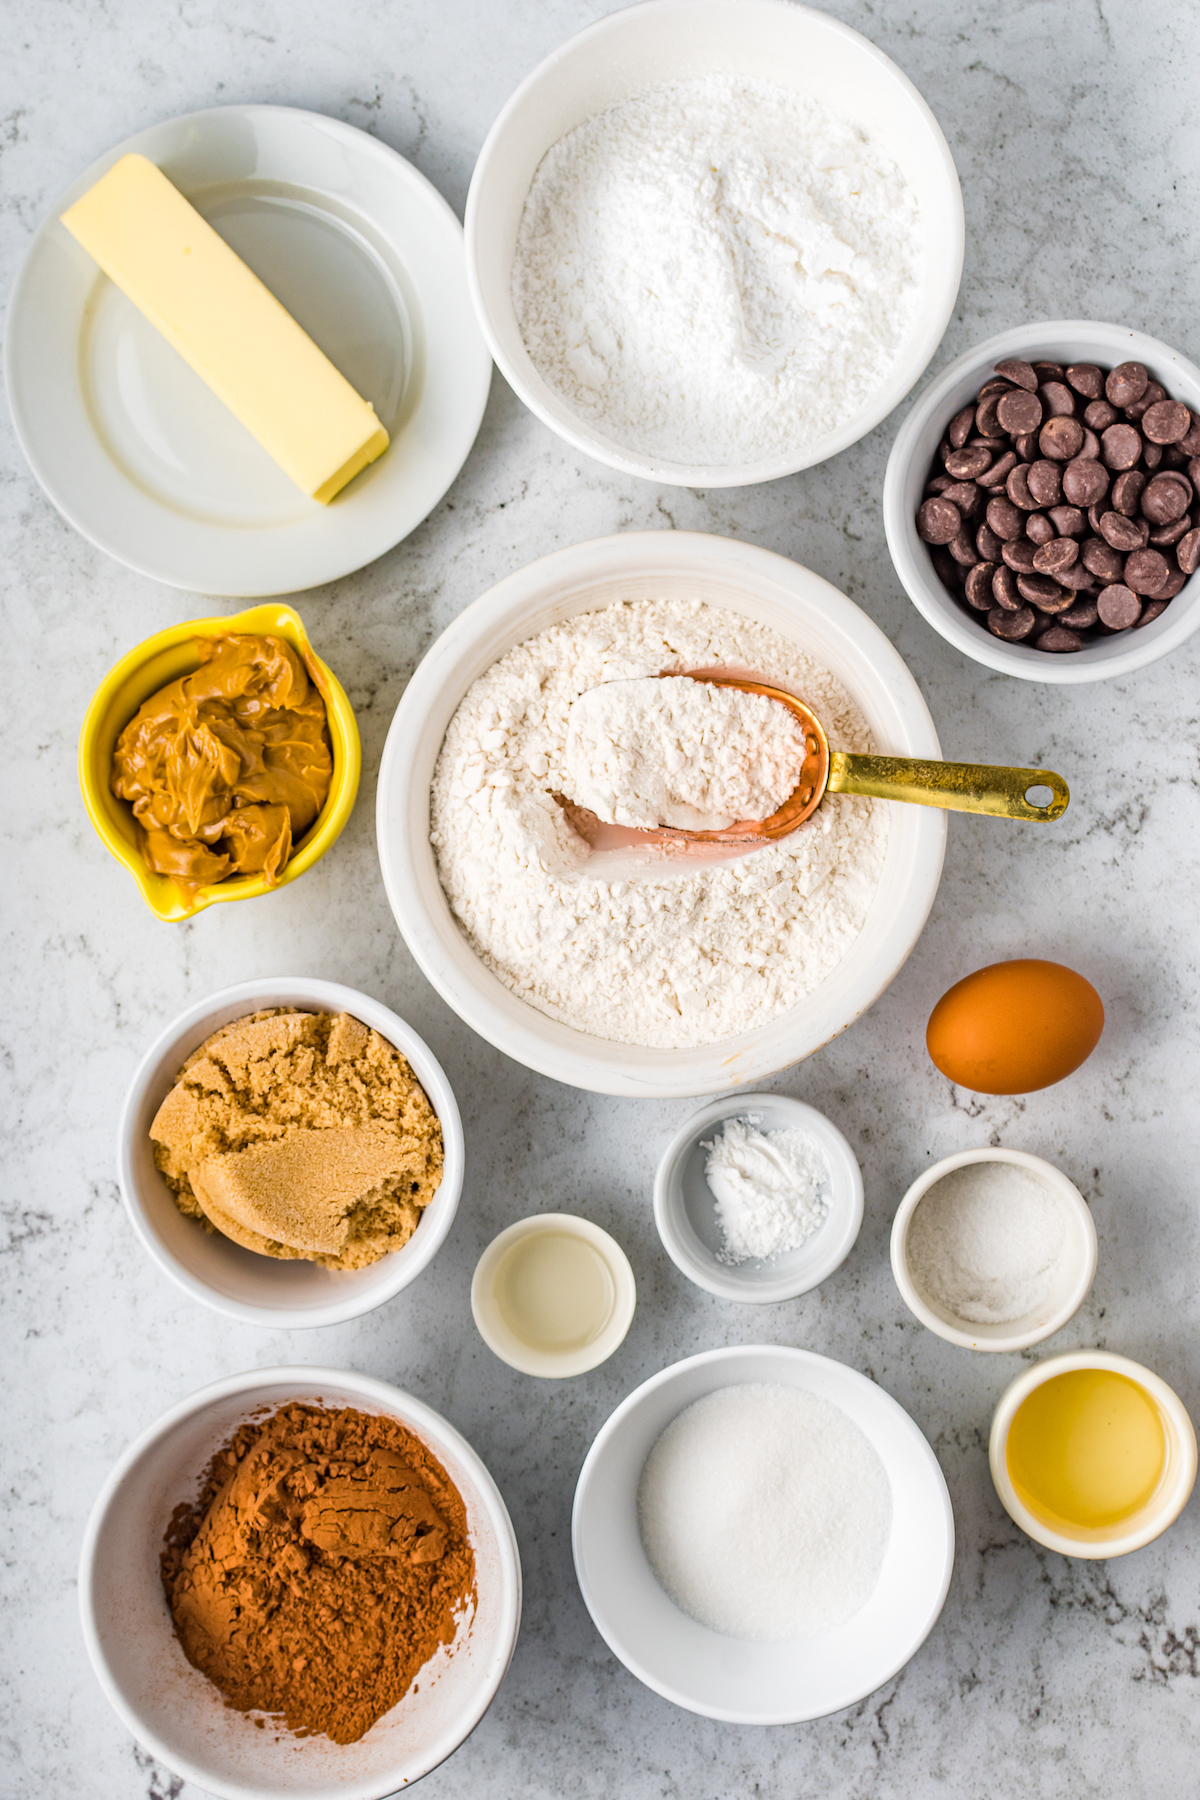 From top left: Butter, sugar, chocolate chips, peanut butter, flour, brown sugar, egg, cocoa powder, powdered sugar, vanilla, baking powder, salt, oil.